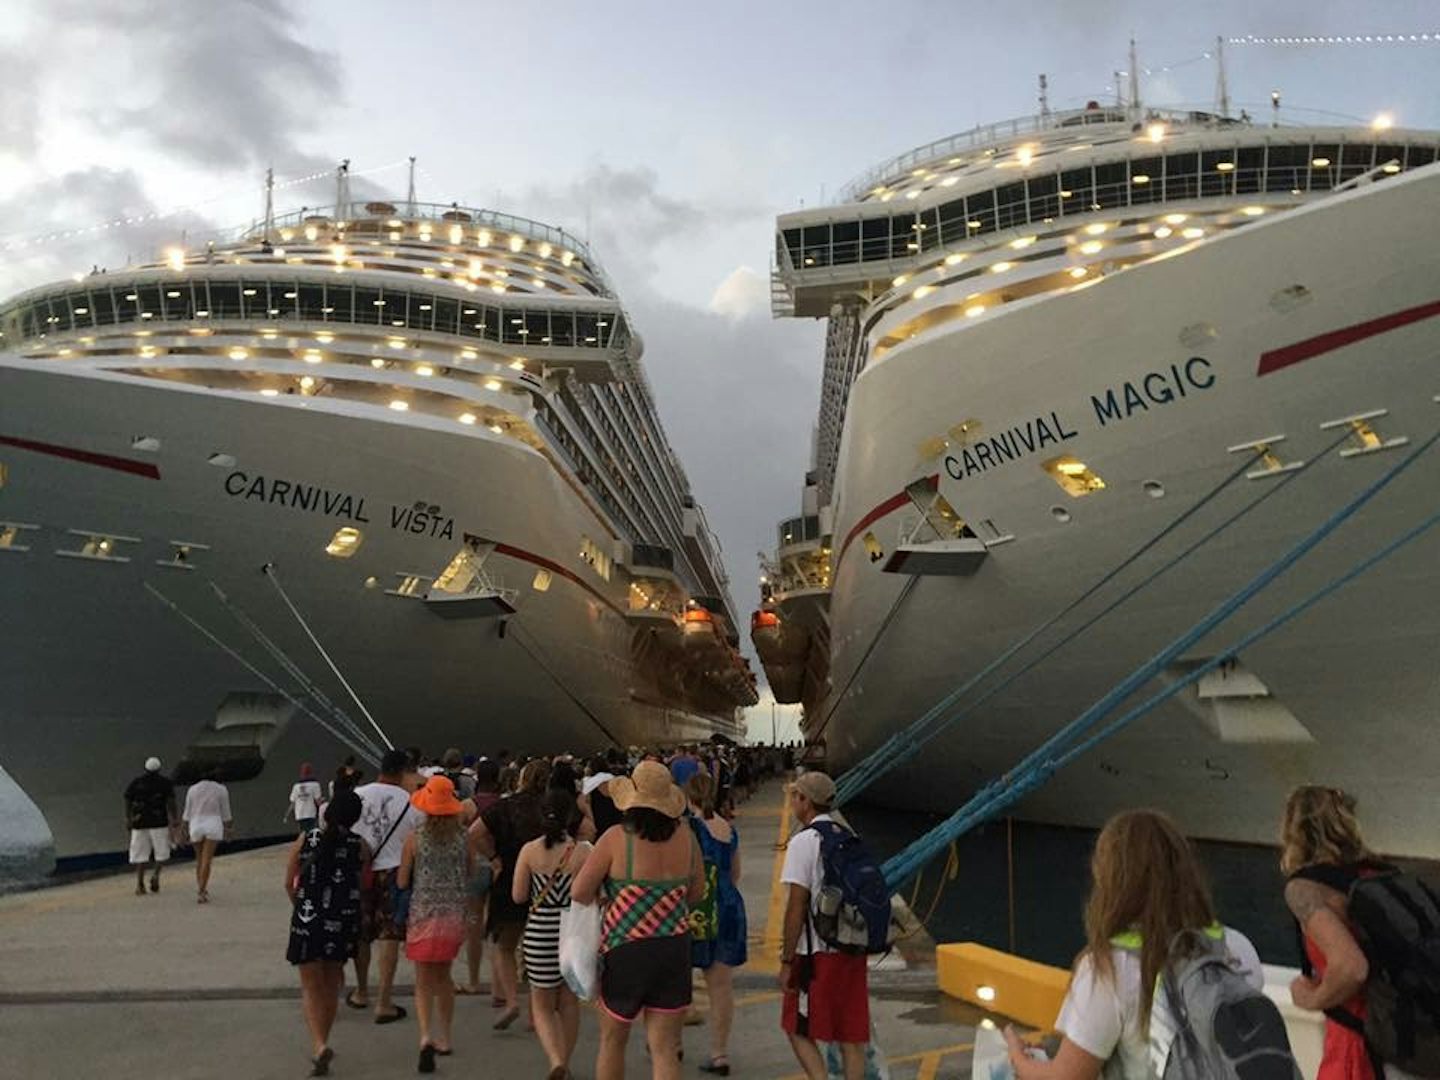 Carnival Magic and Vista docked in Grand Turks